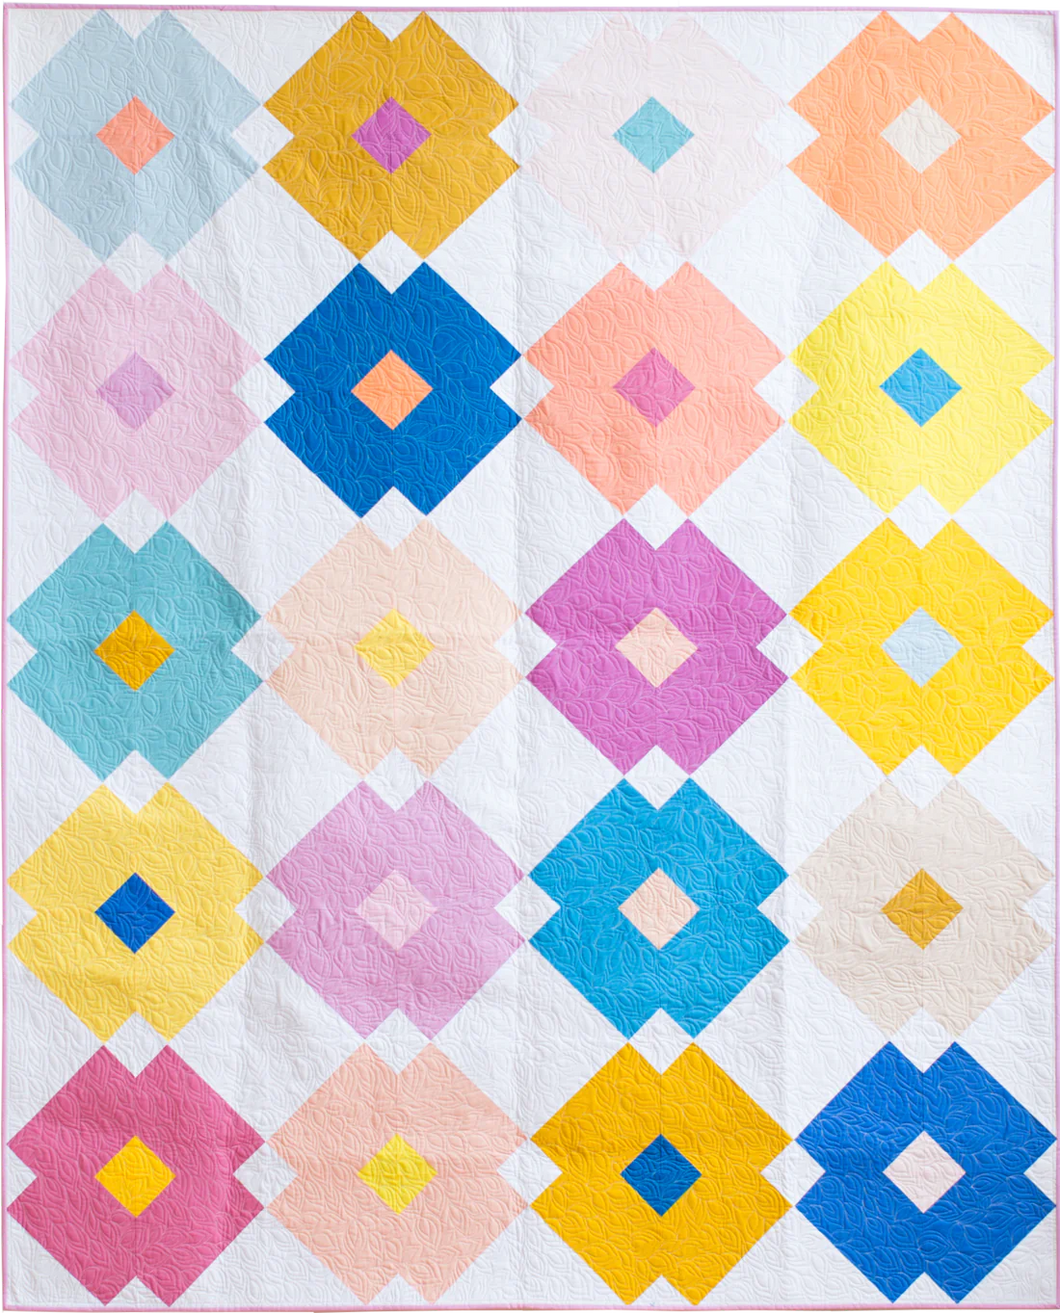 Flower Tile Quilt Paper Pattern - Then Came June